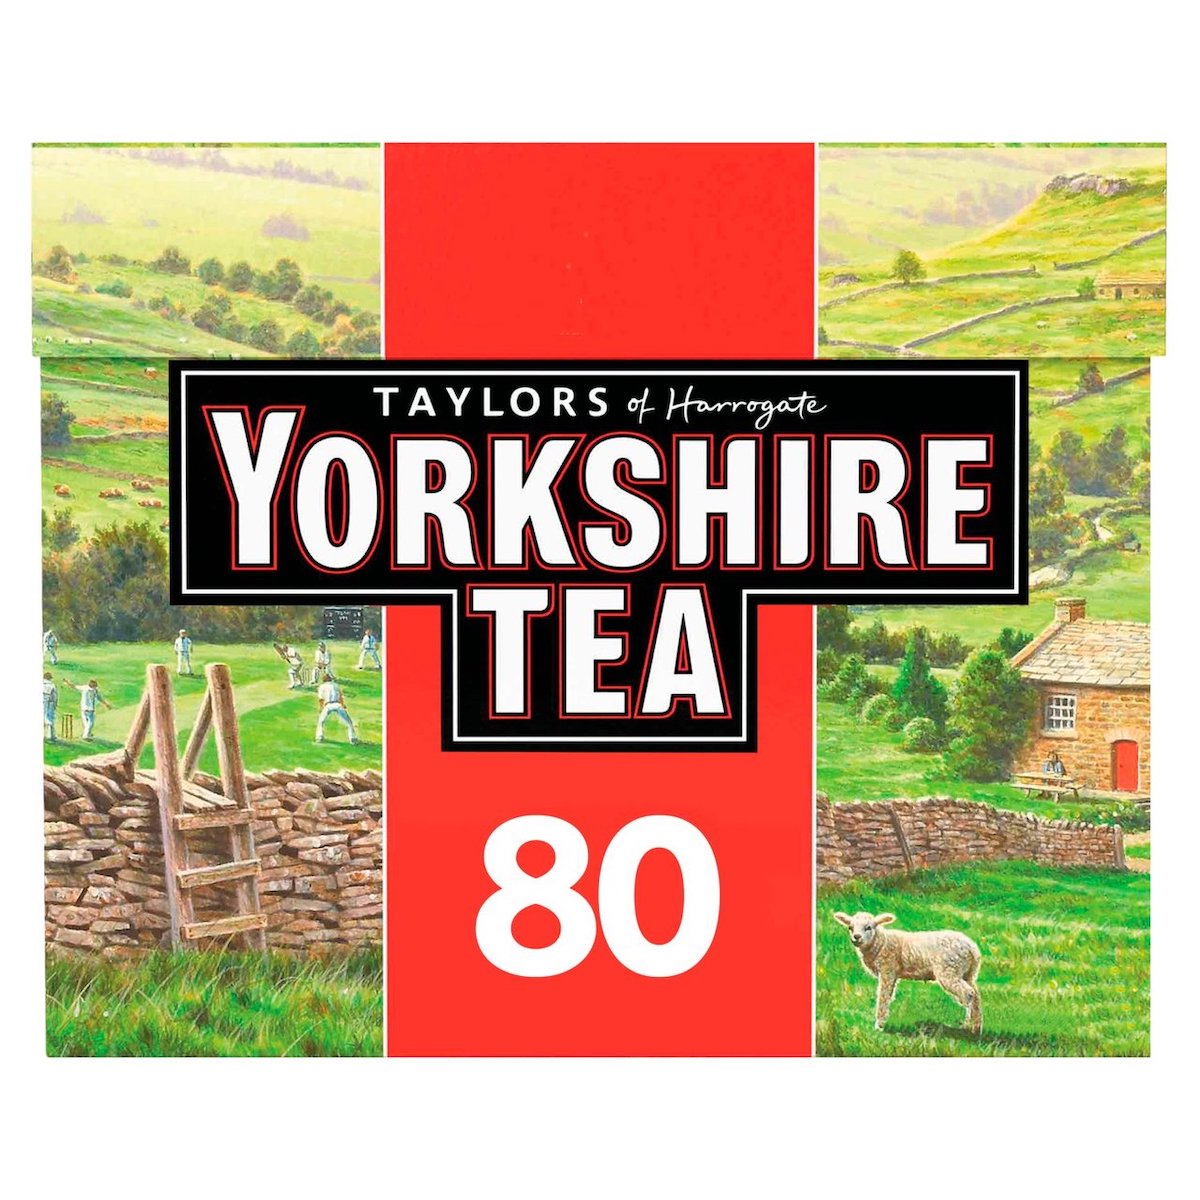 Taylors Of Harrogate Yorkshire Tea 80 Teabags